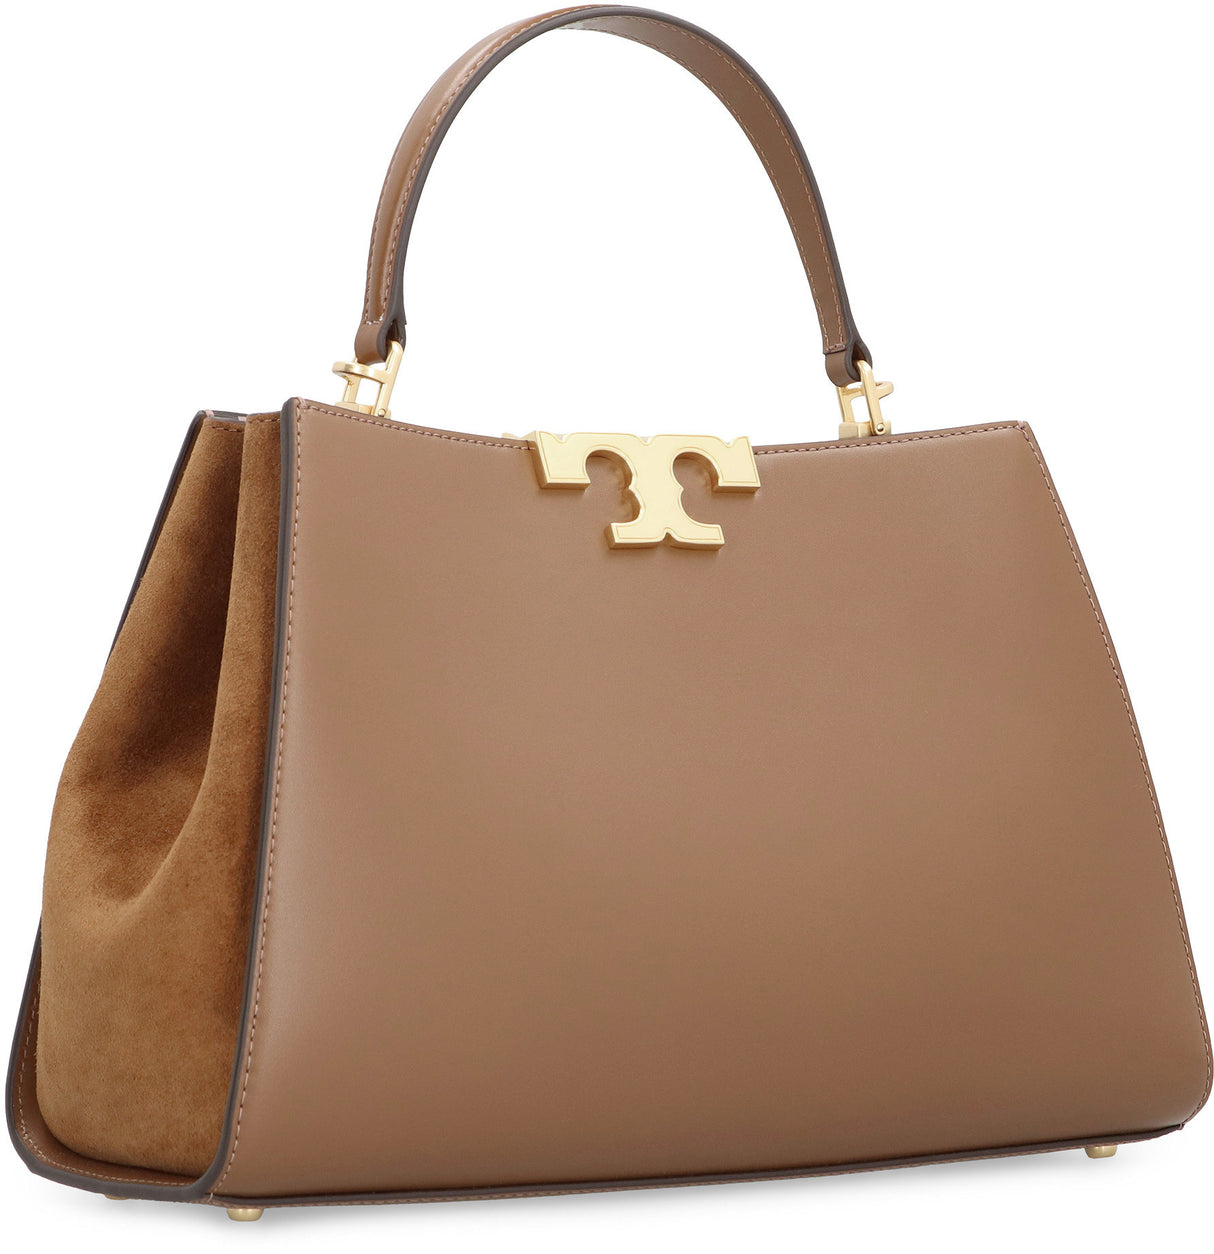 TORY BURCH Saddle Brown Leather Boston Handbag for Women